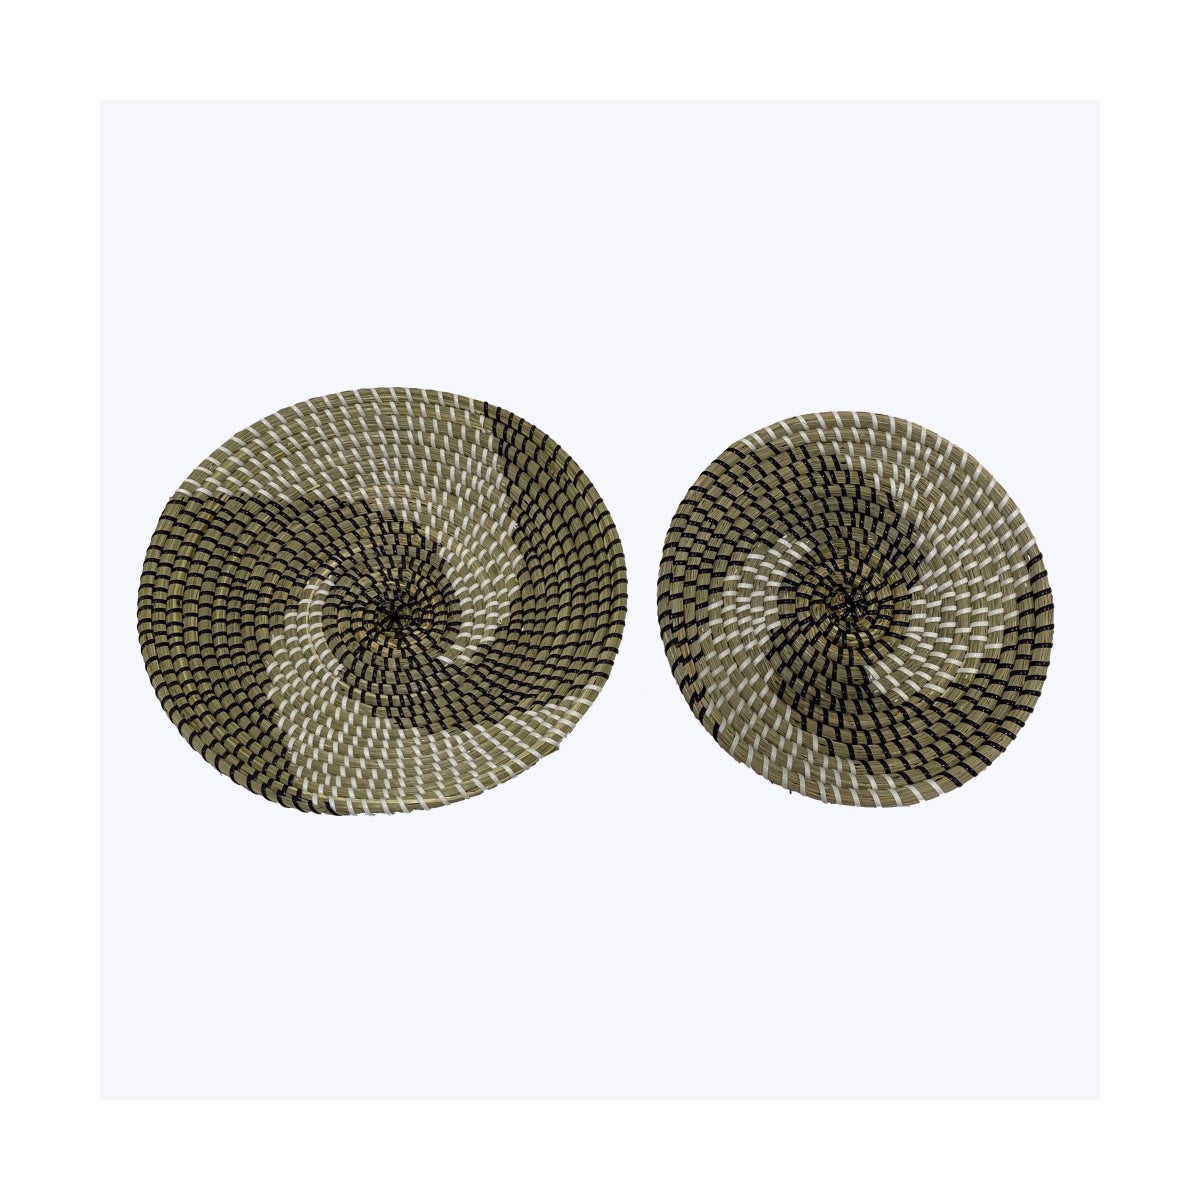 Handwoven Seagrass Basket Wall/Tabletop Decor, 2 pcs/Set